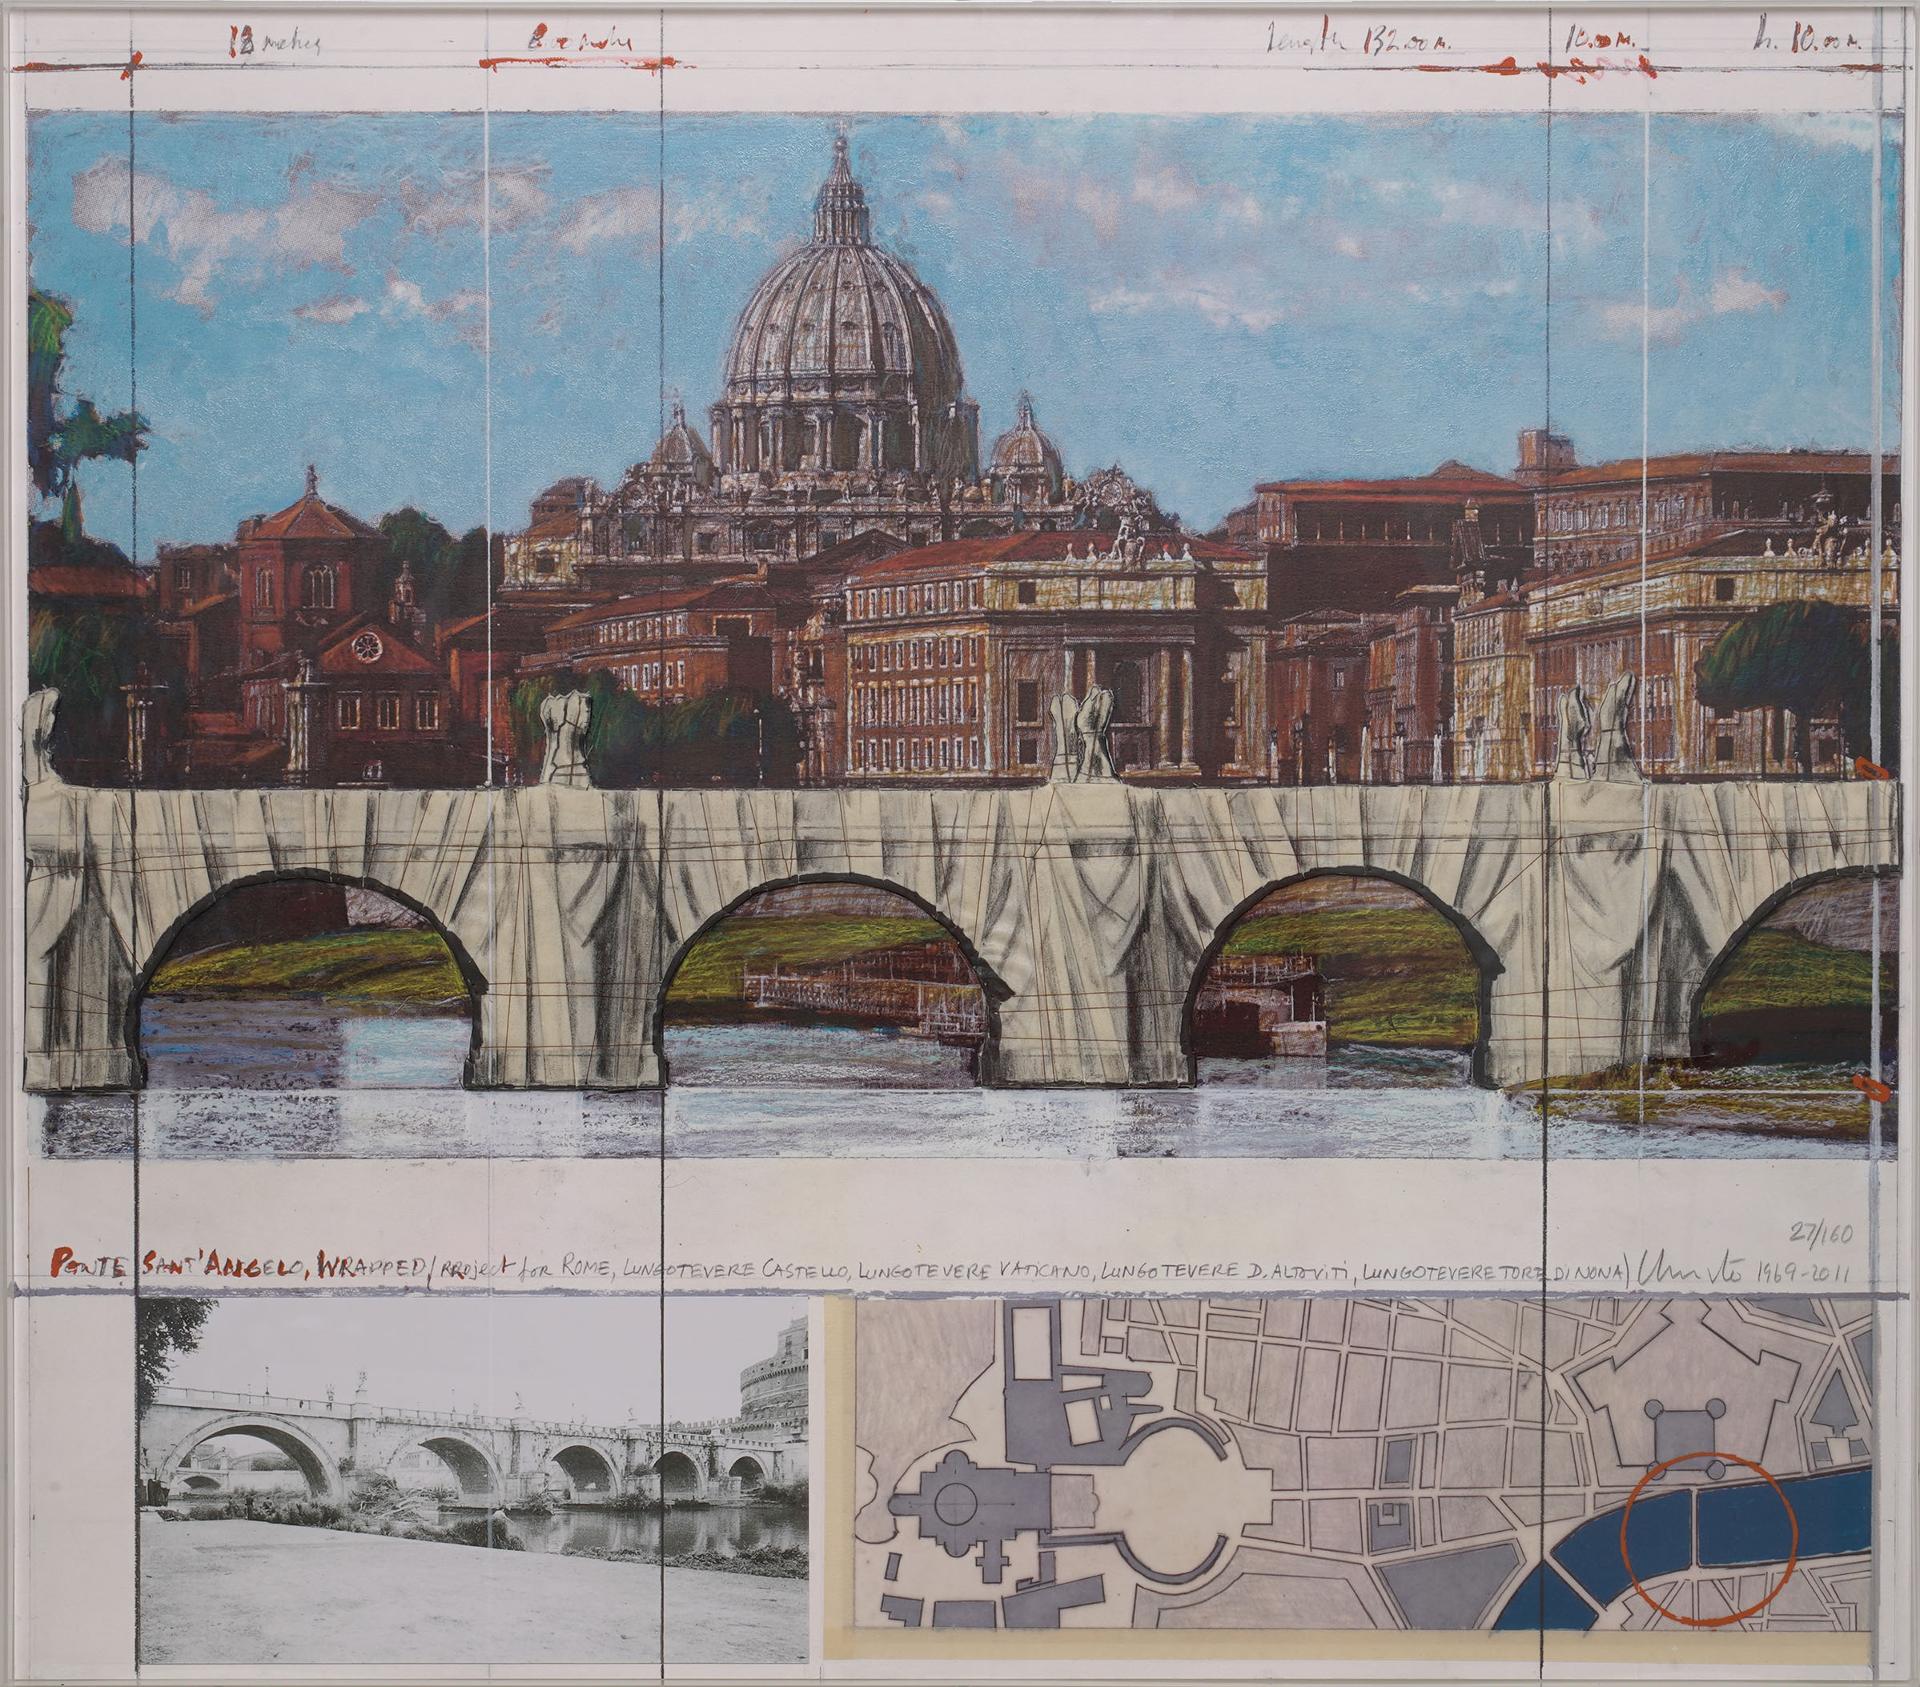 Christo (1935-2020) - Ponte Sant'angelo, Wrapped, 2011 [s. 205]